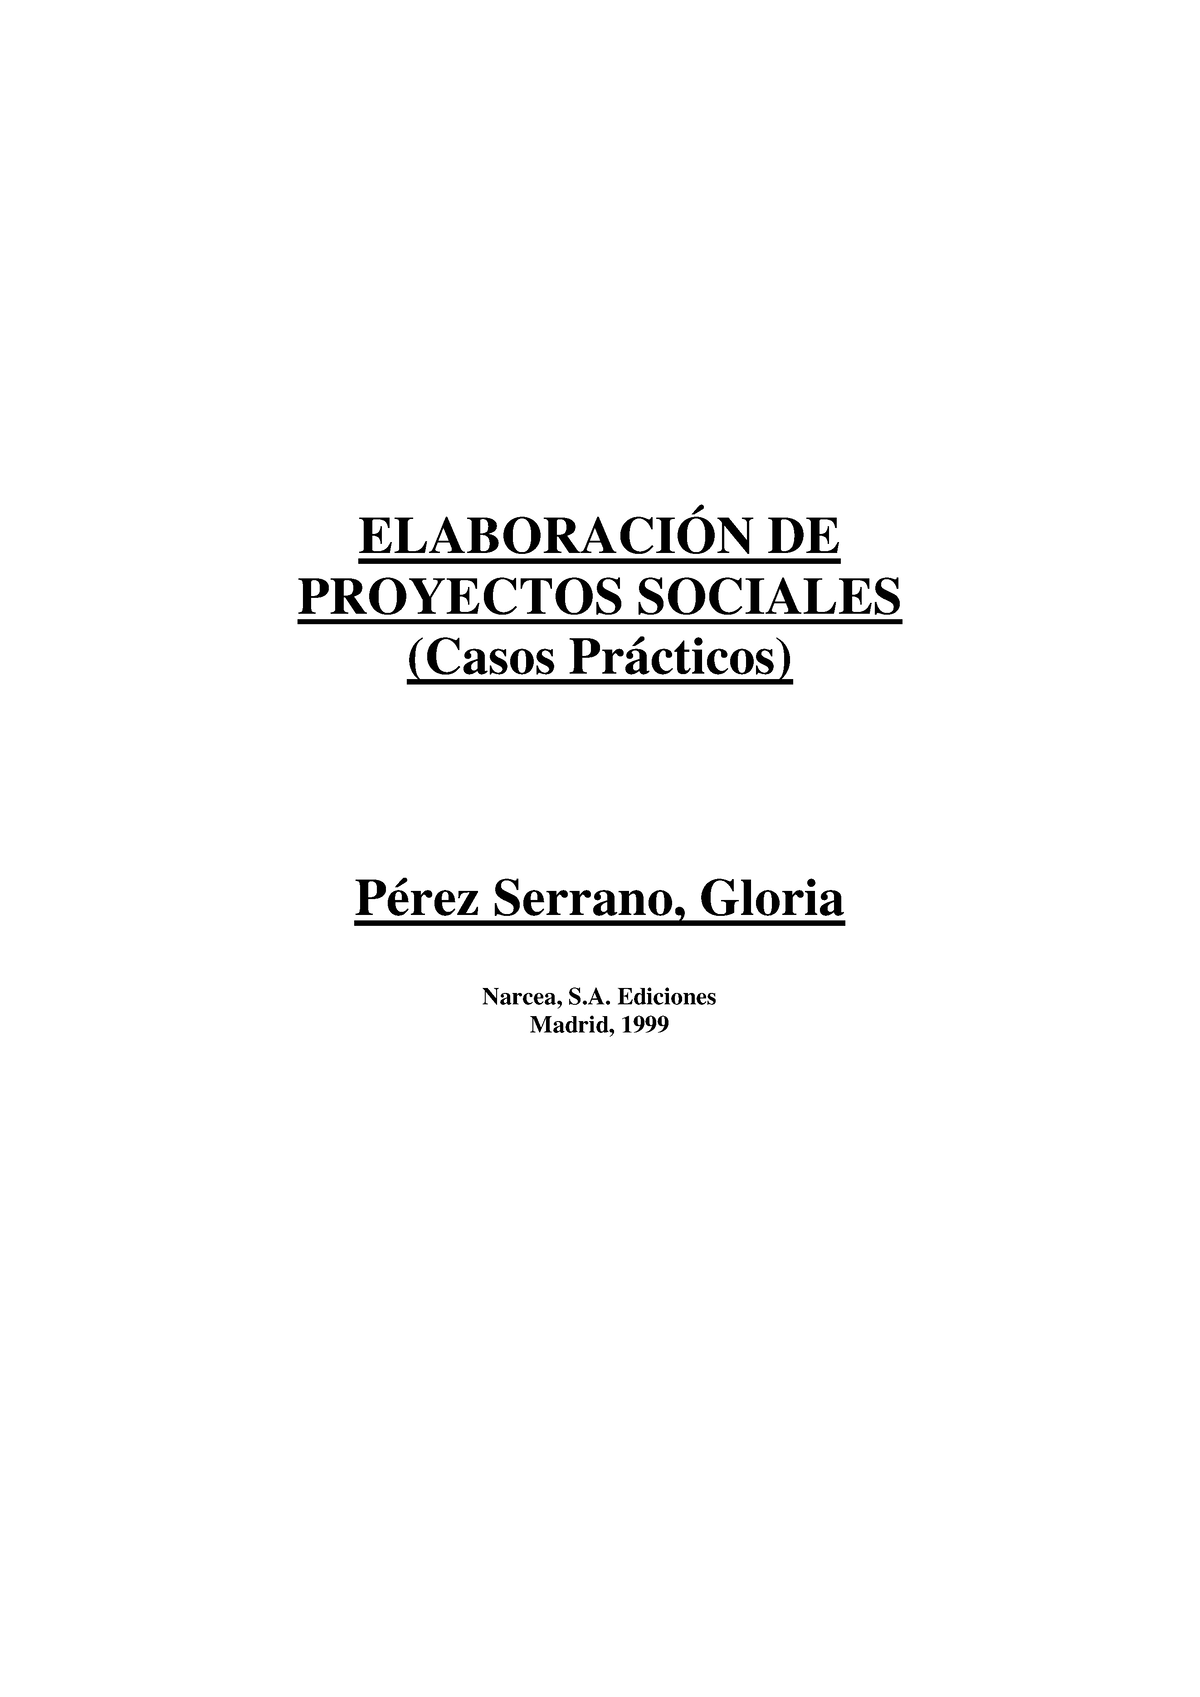 2 Elaboración De Proyectos Sociales Pérez Serrano Gloria ElaboraciÓn De Proyectos Sociales 6839